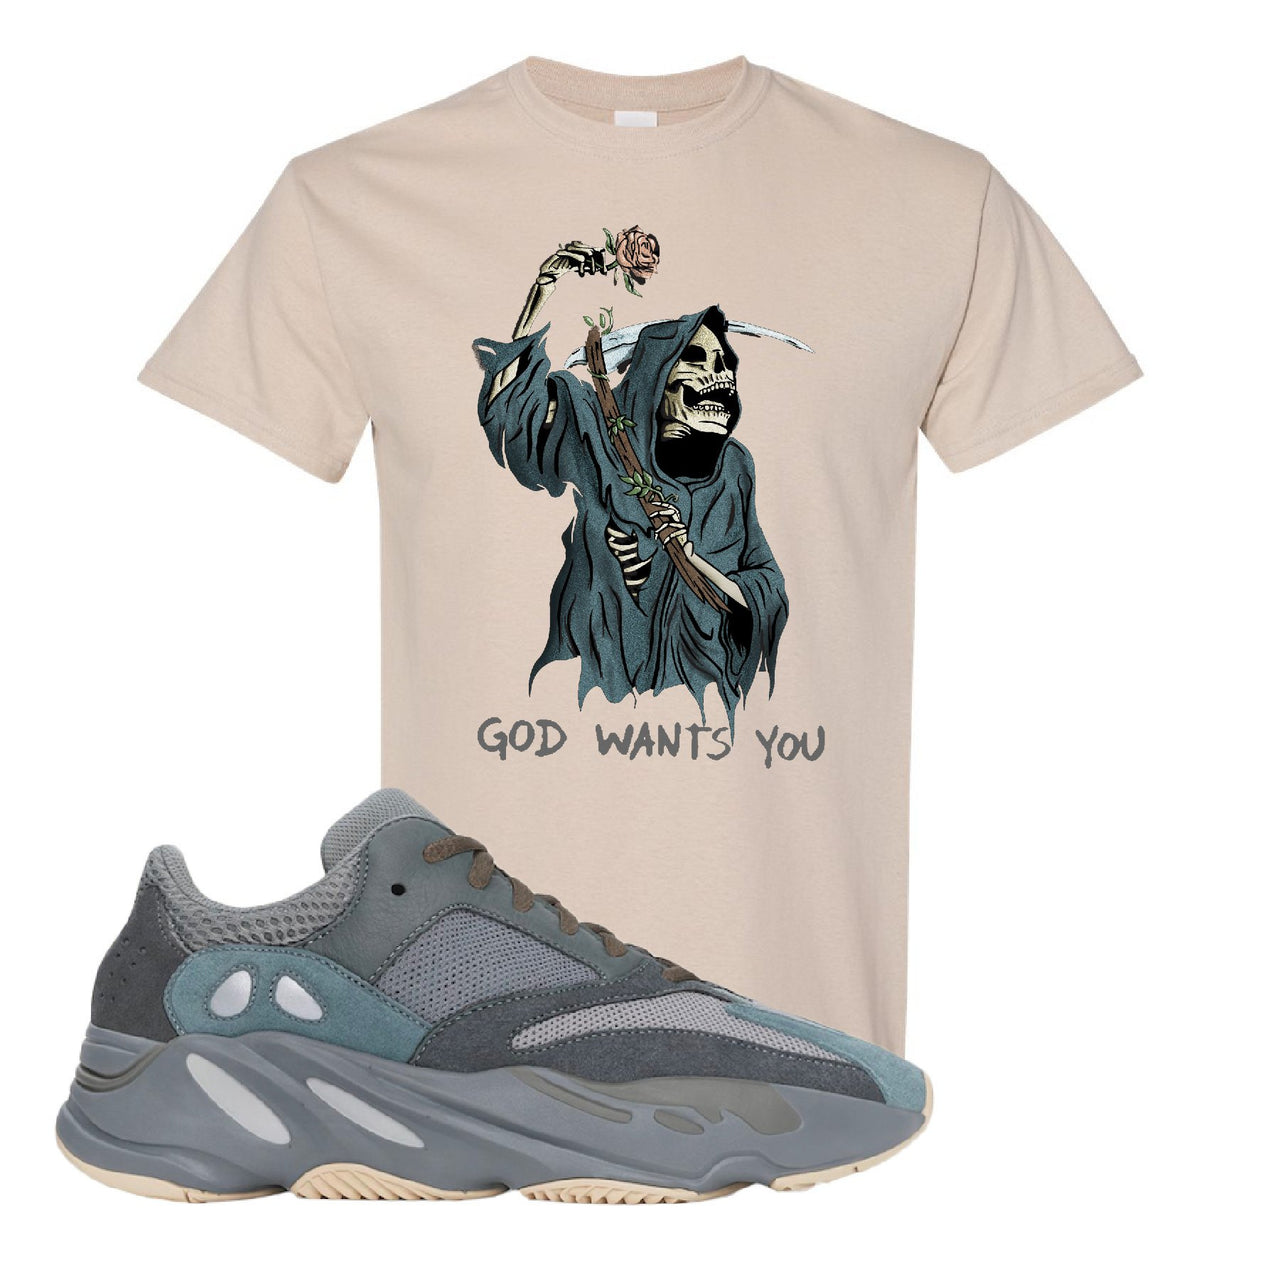 Yeezy Boost 700 Teal Blue God Wants You Reaper Sand Sneaker Hook Up T-Shirt